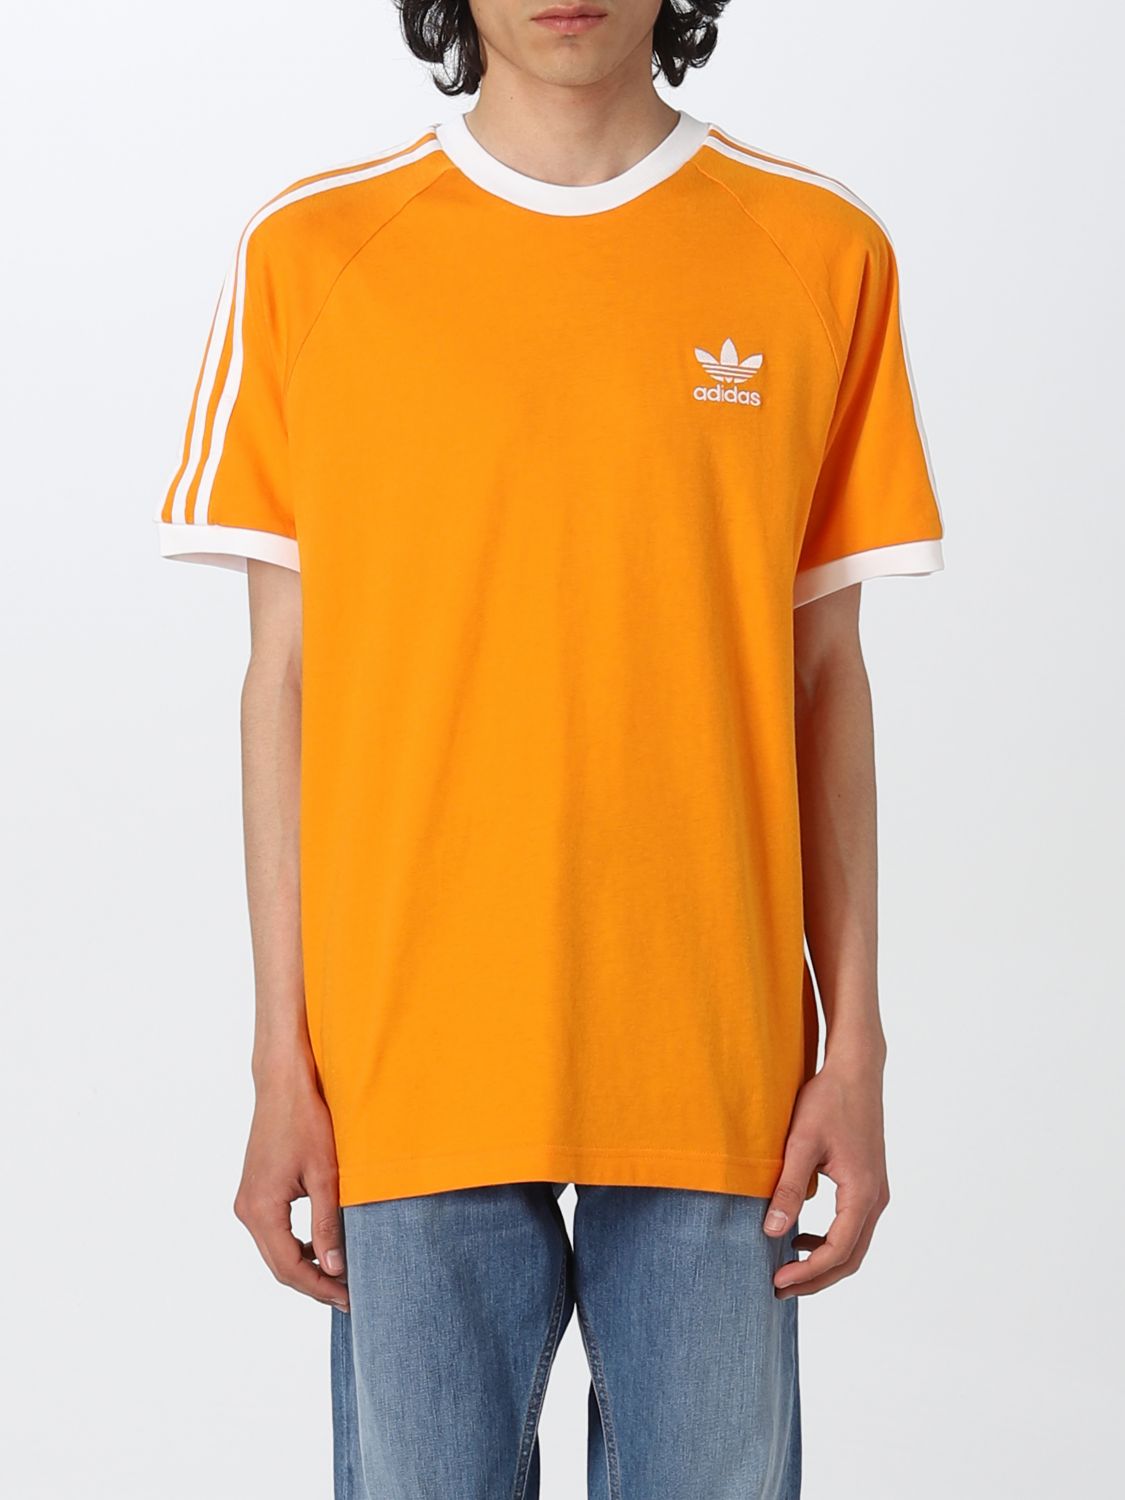 waarde Streven Reis ADIDAS ORIGINALS: T-shirt with logo - Orange | Adidas Originals t-shirt  HE9551 online on GIGLIO.COM